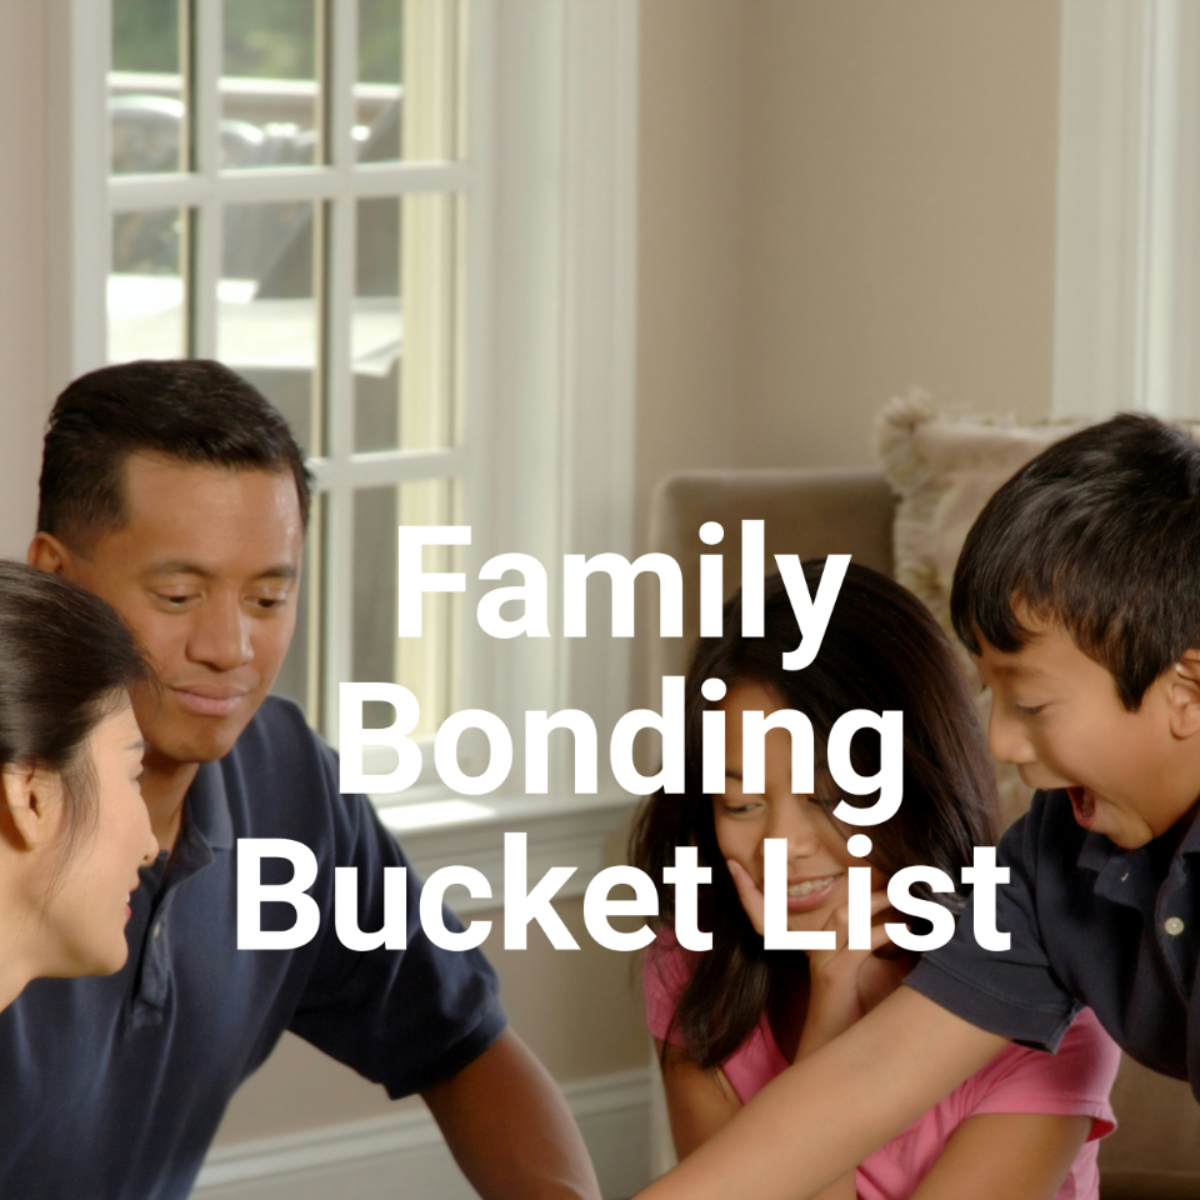 Family Bucket List Template